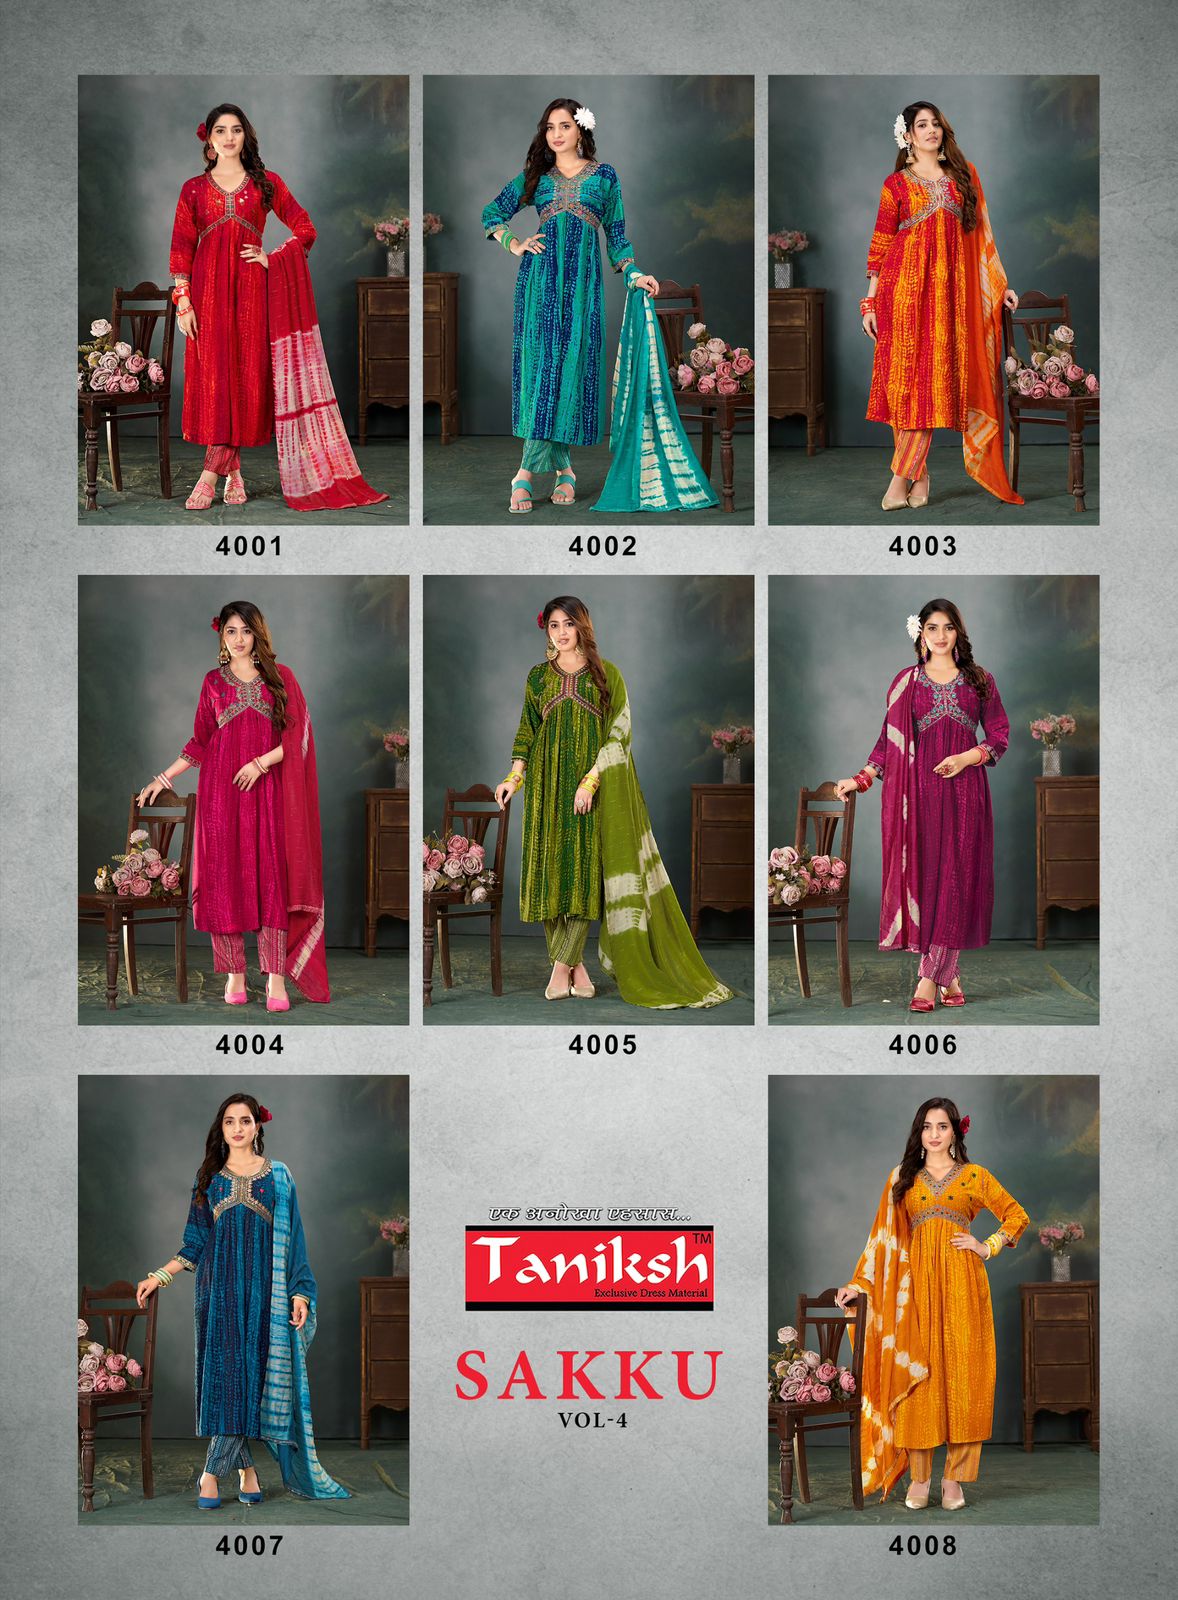 Tanishk Sakku Vol 4 collection 9